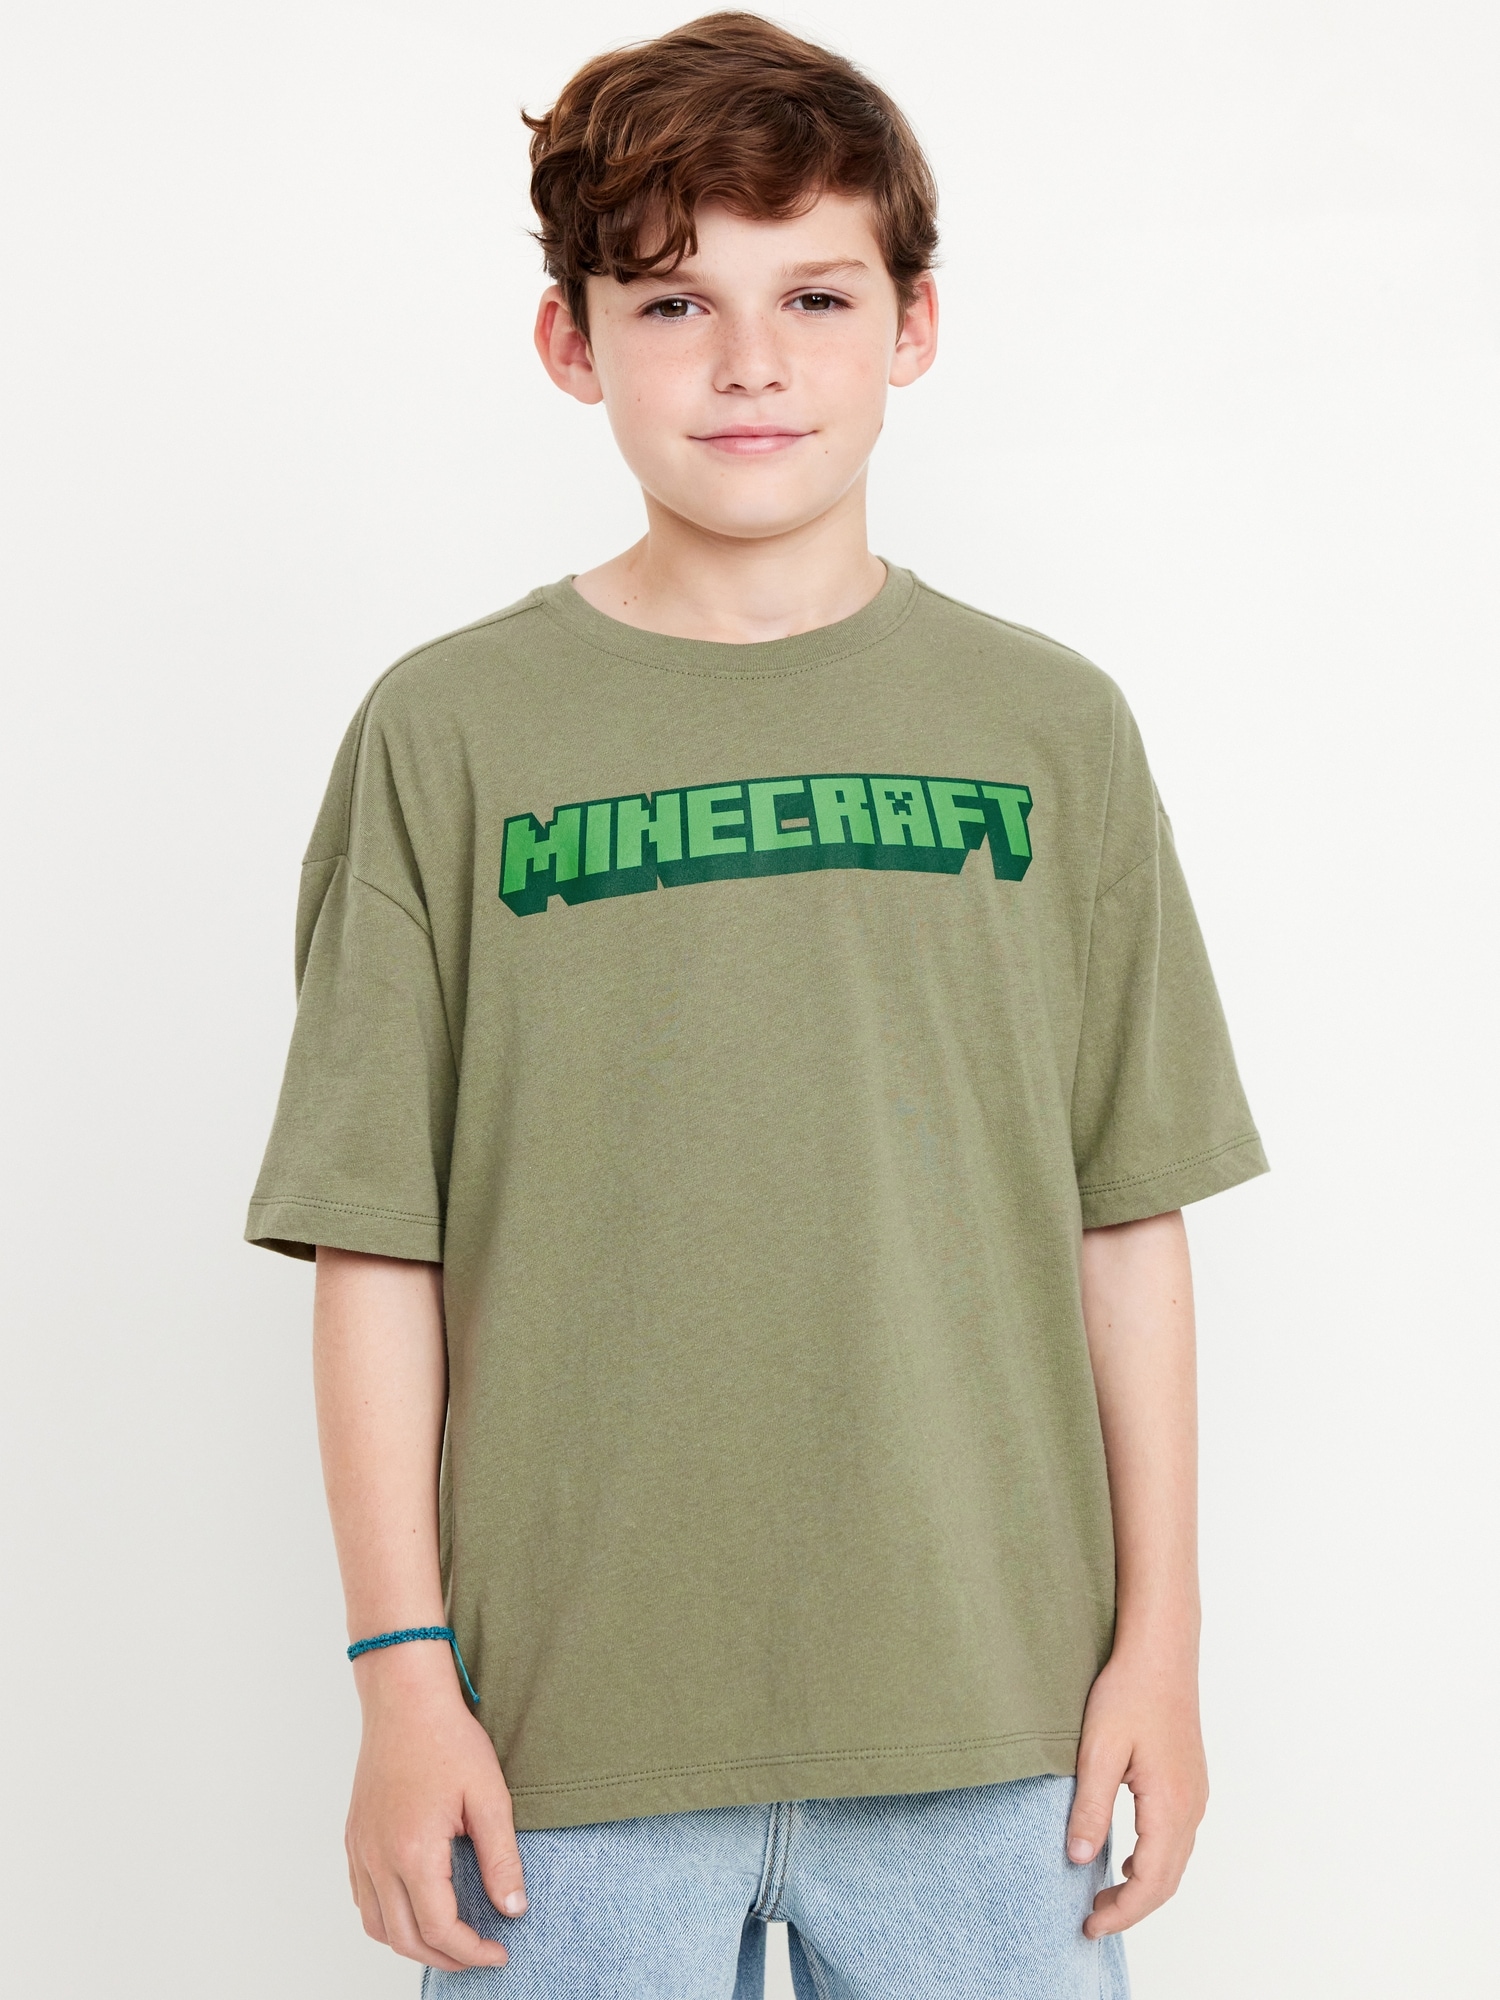 Minecraft Oversized Gender-Neutral Graphic T-Shirt for Kids